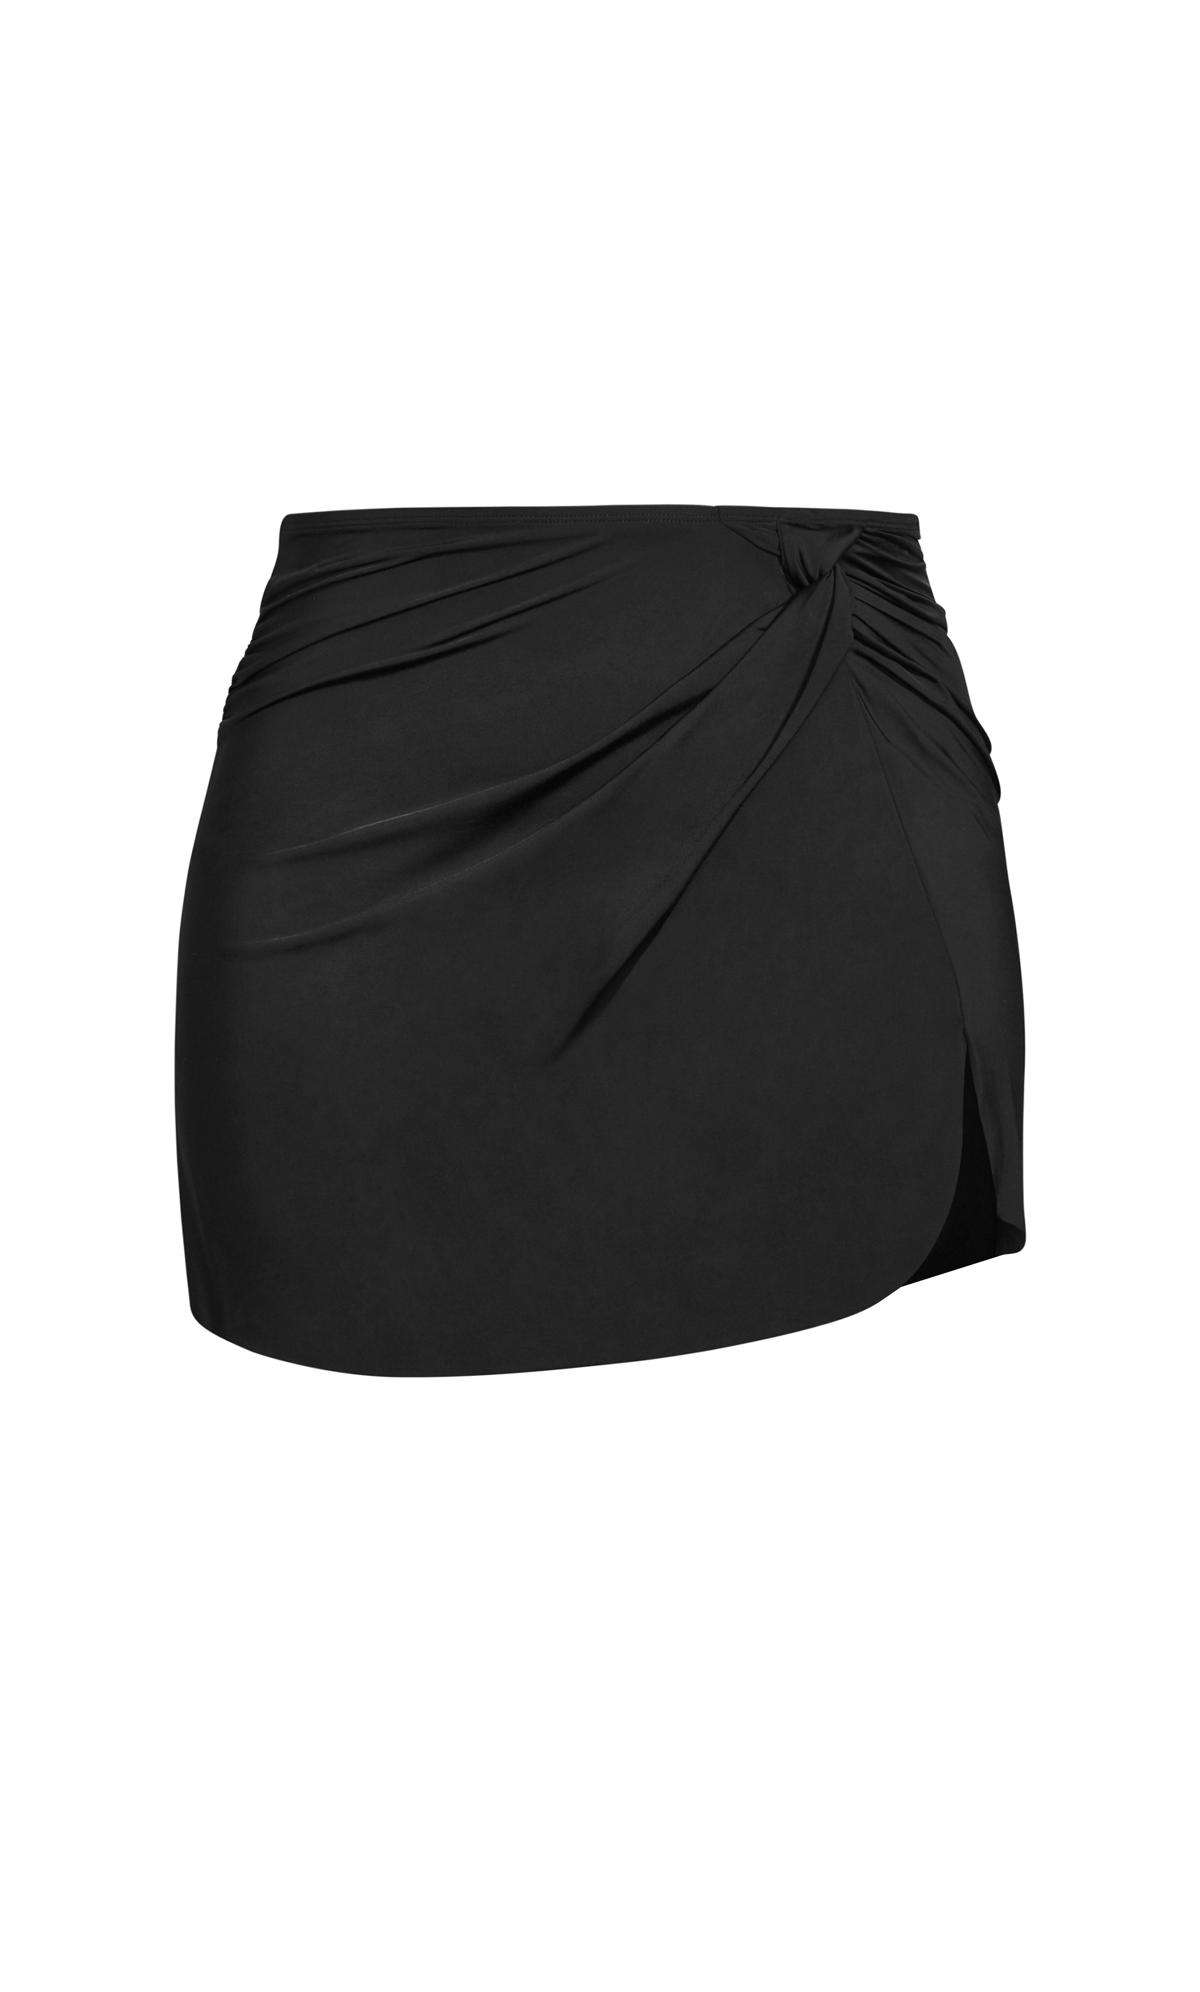 Plus Size Azores Bikini Skirt Black 2